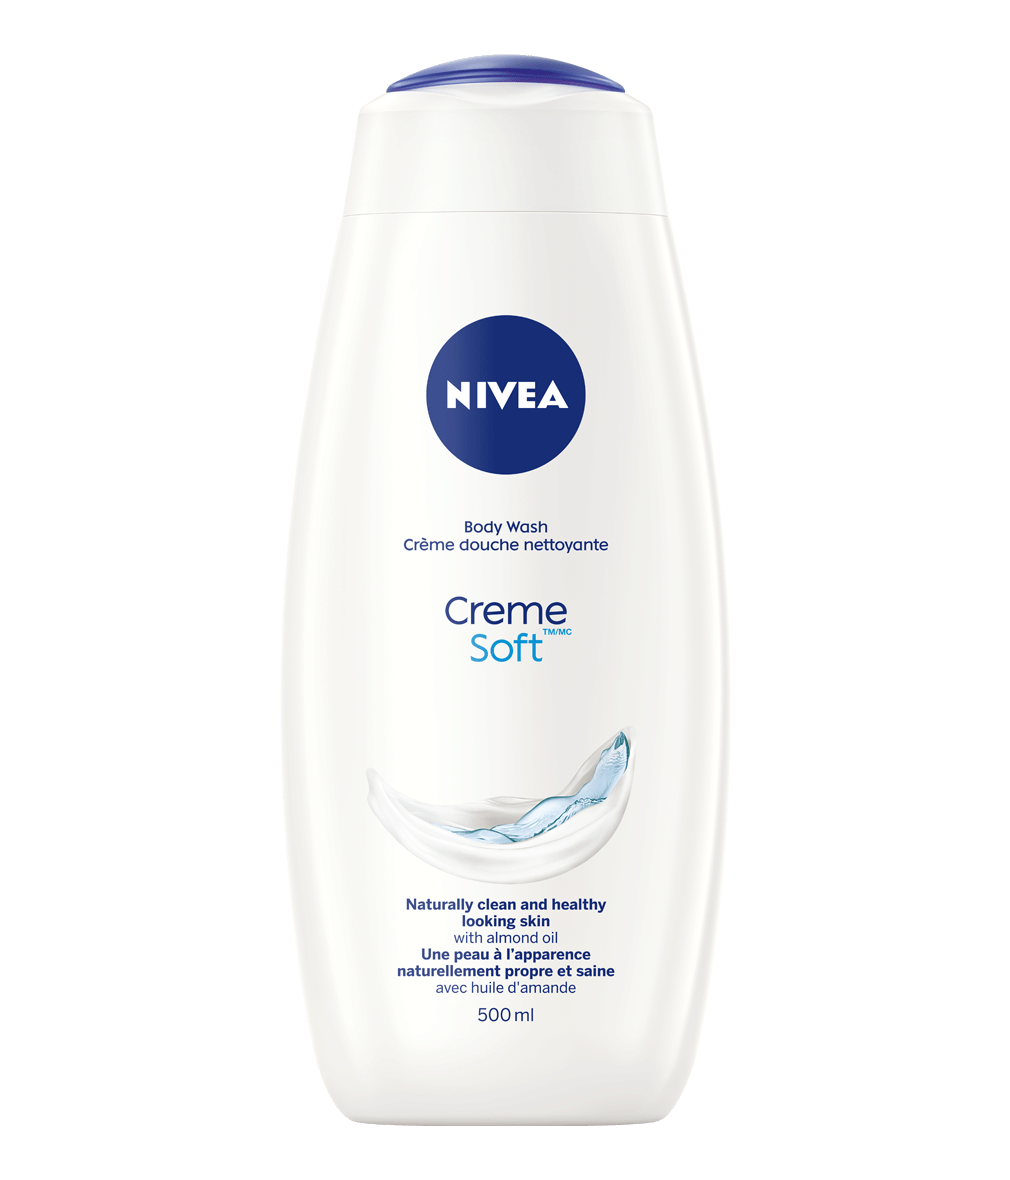 NIVEA Crème douche nettoyante Soft (TM/MC)